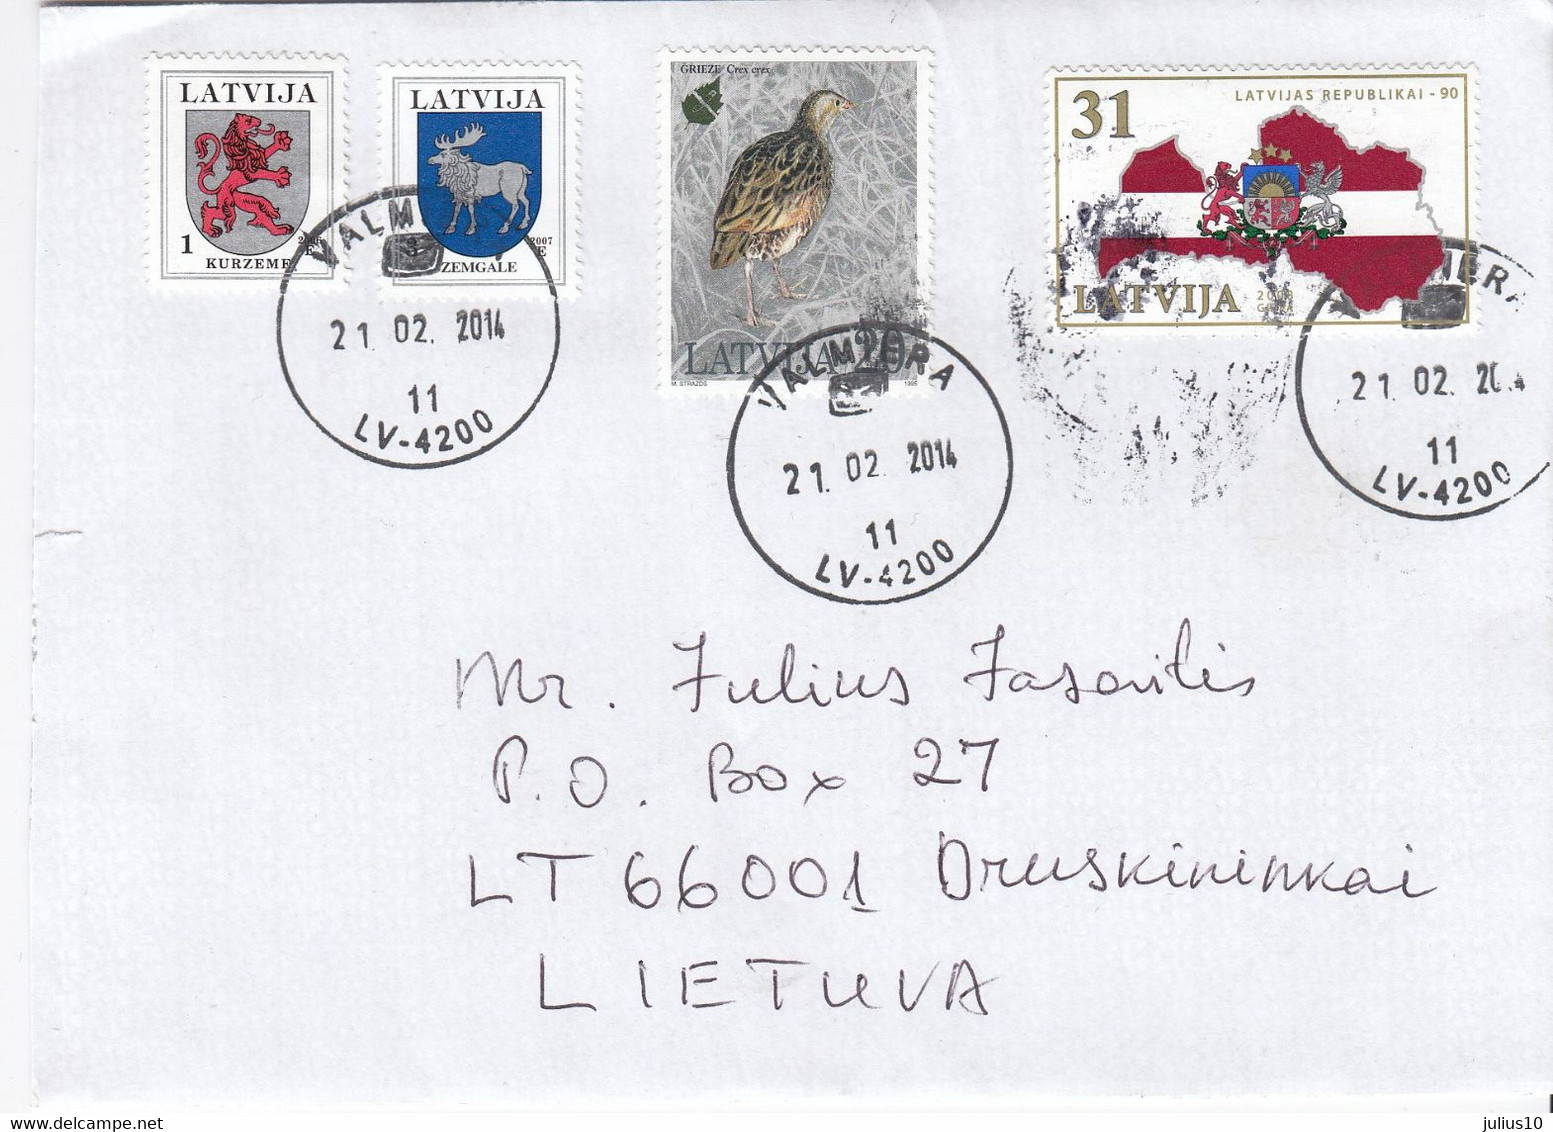 LATVIA 2014 Cover Sent To Lithuania Druskininkai #27143 - Letonia